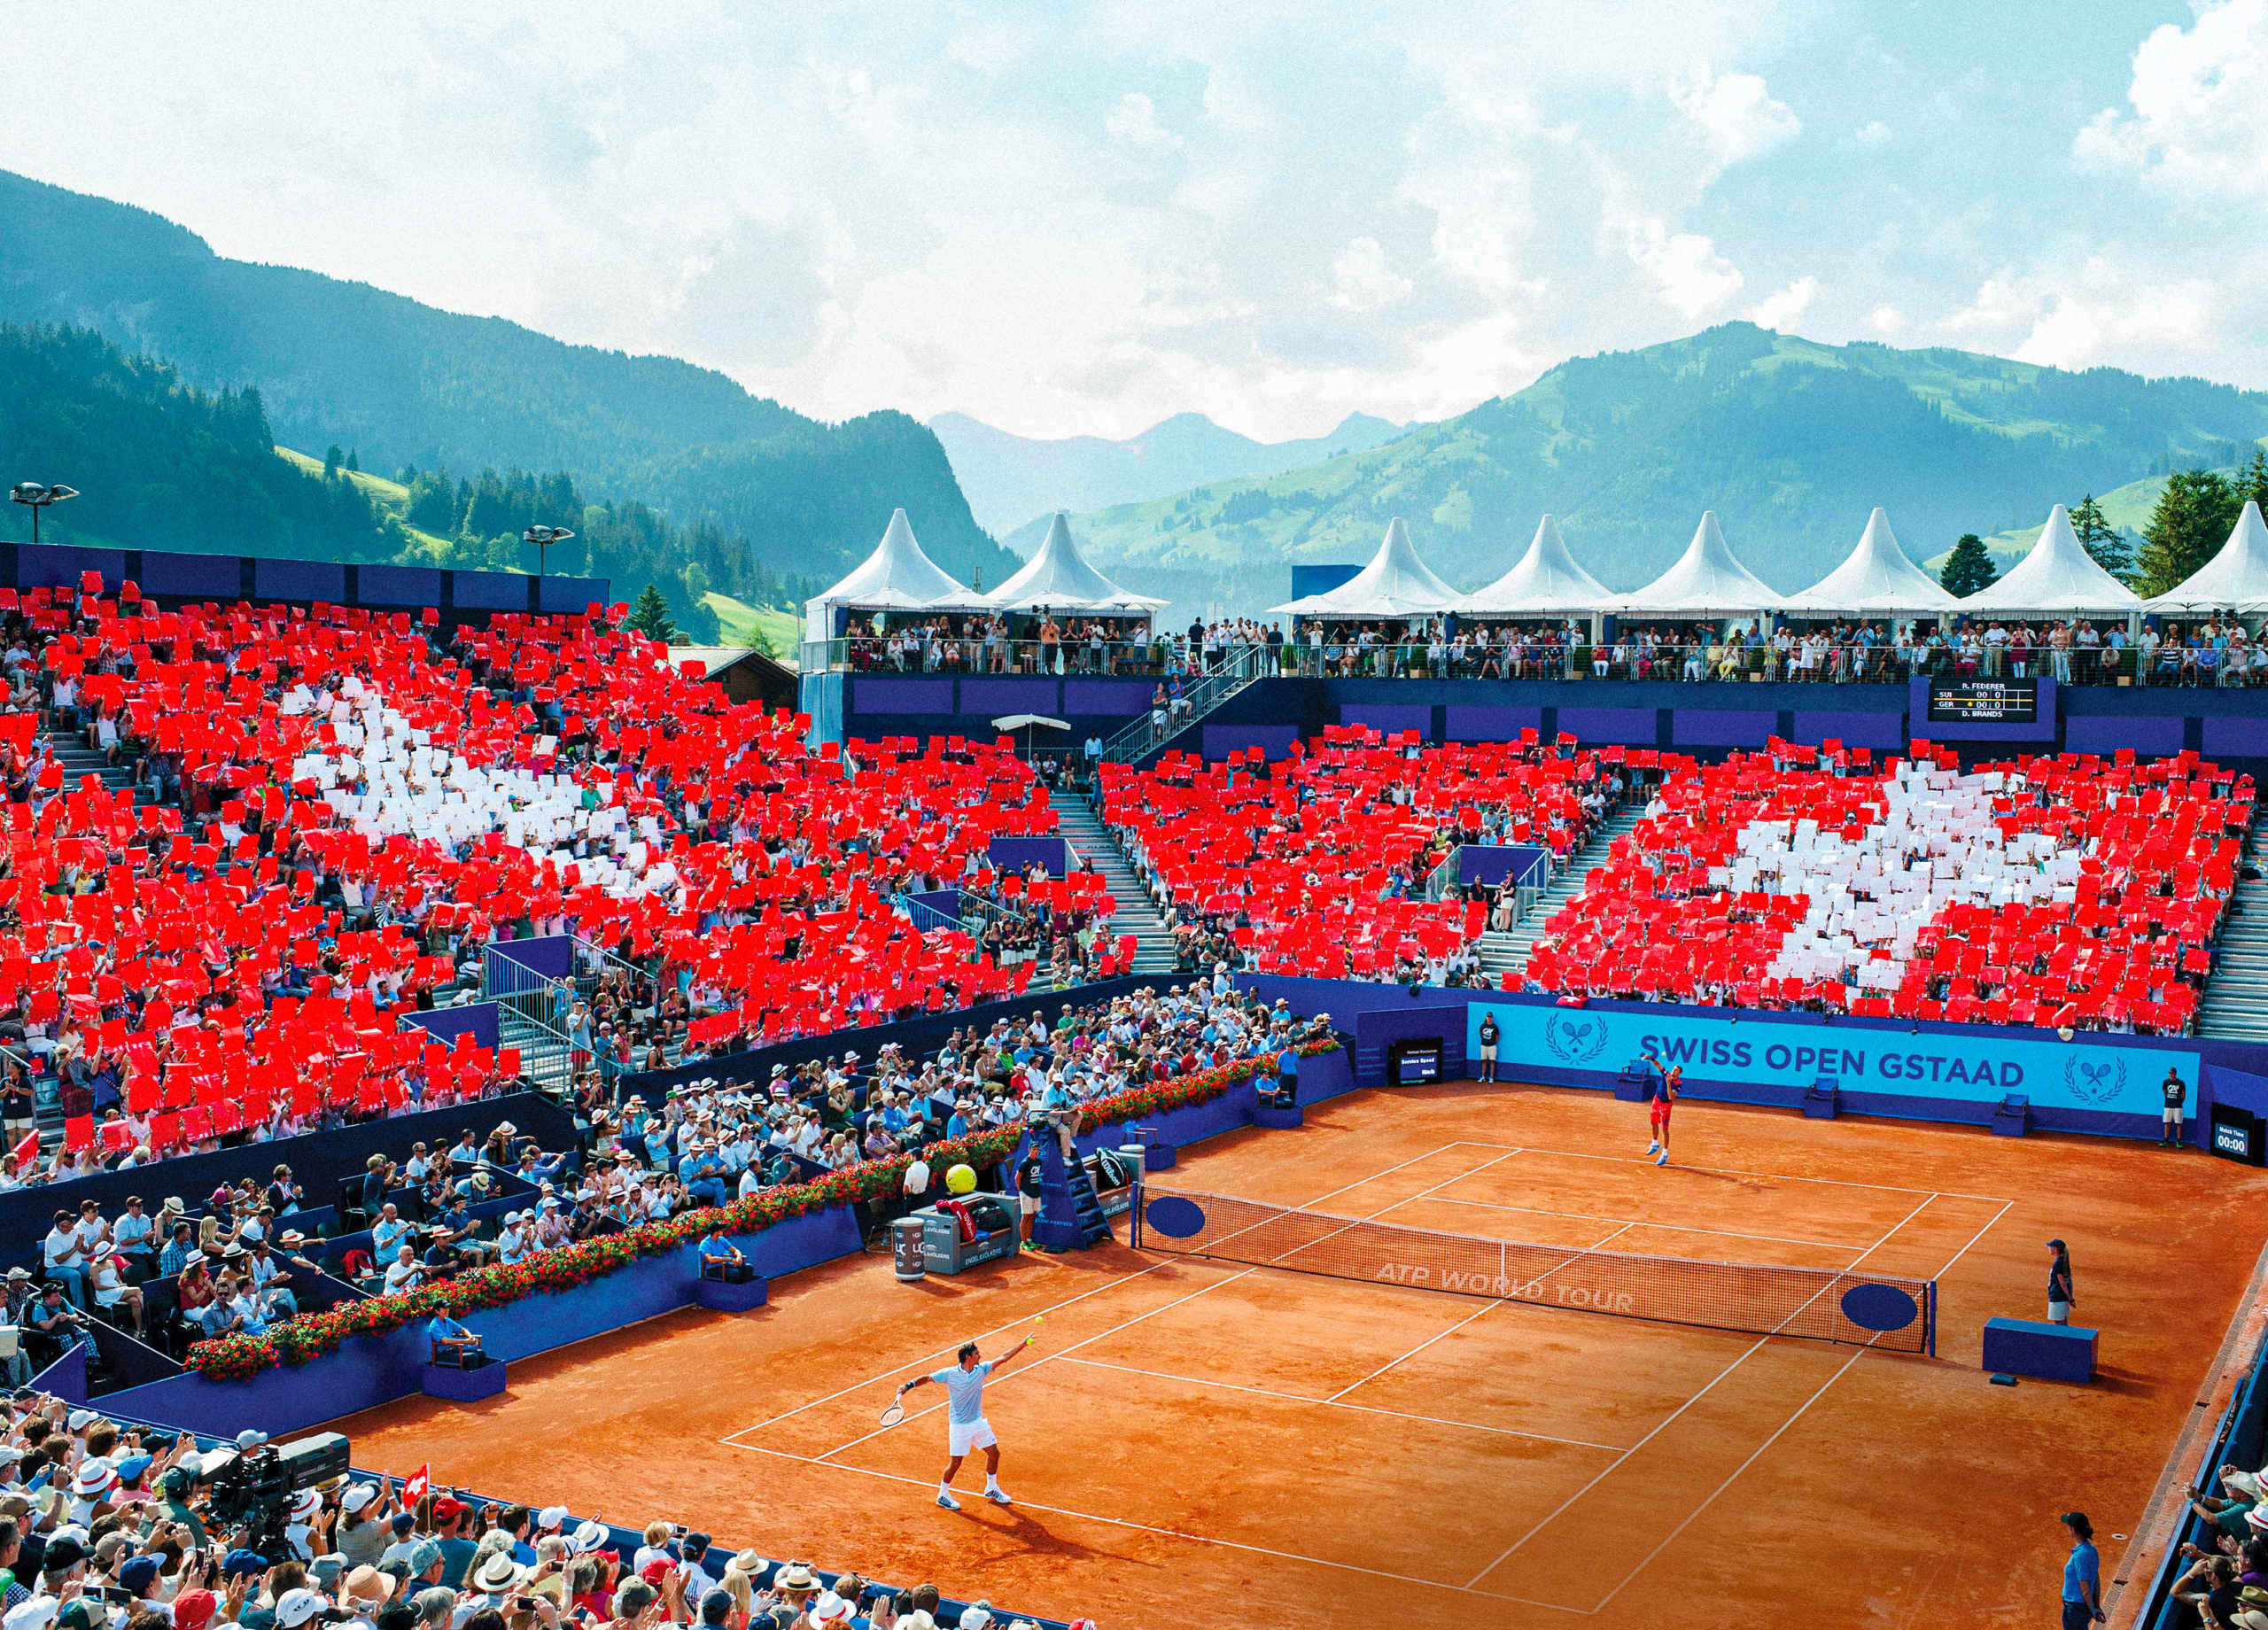 Swiss Open Gstaad ATP 250 The best of Tennis in the Alps